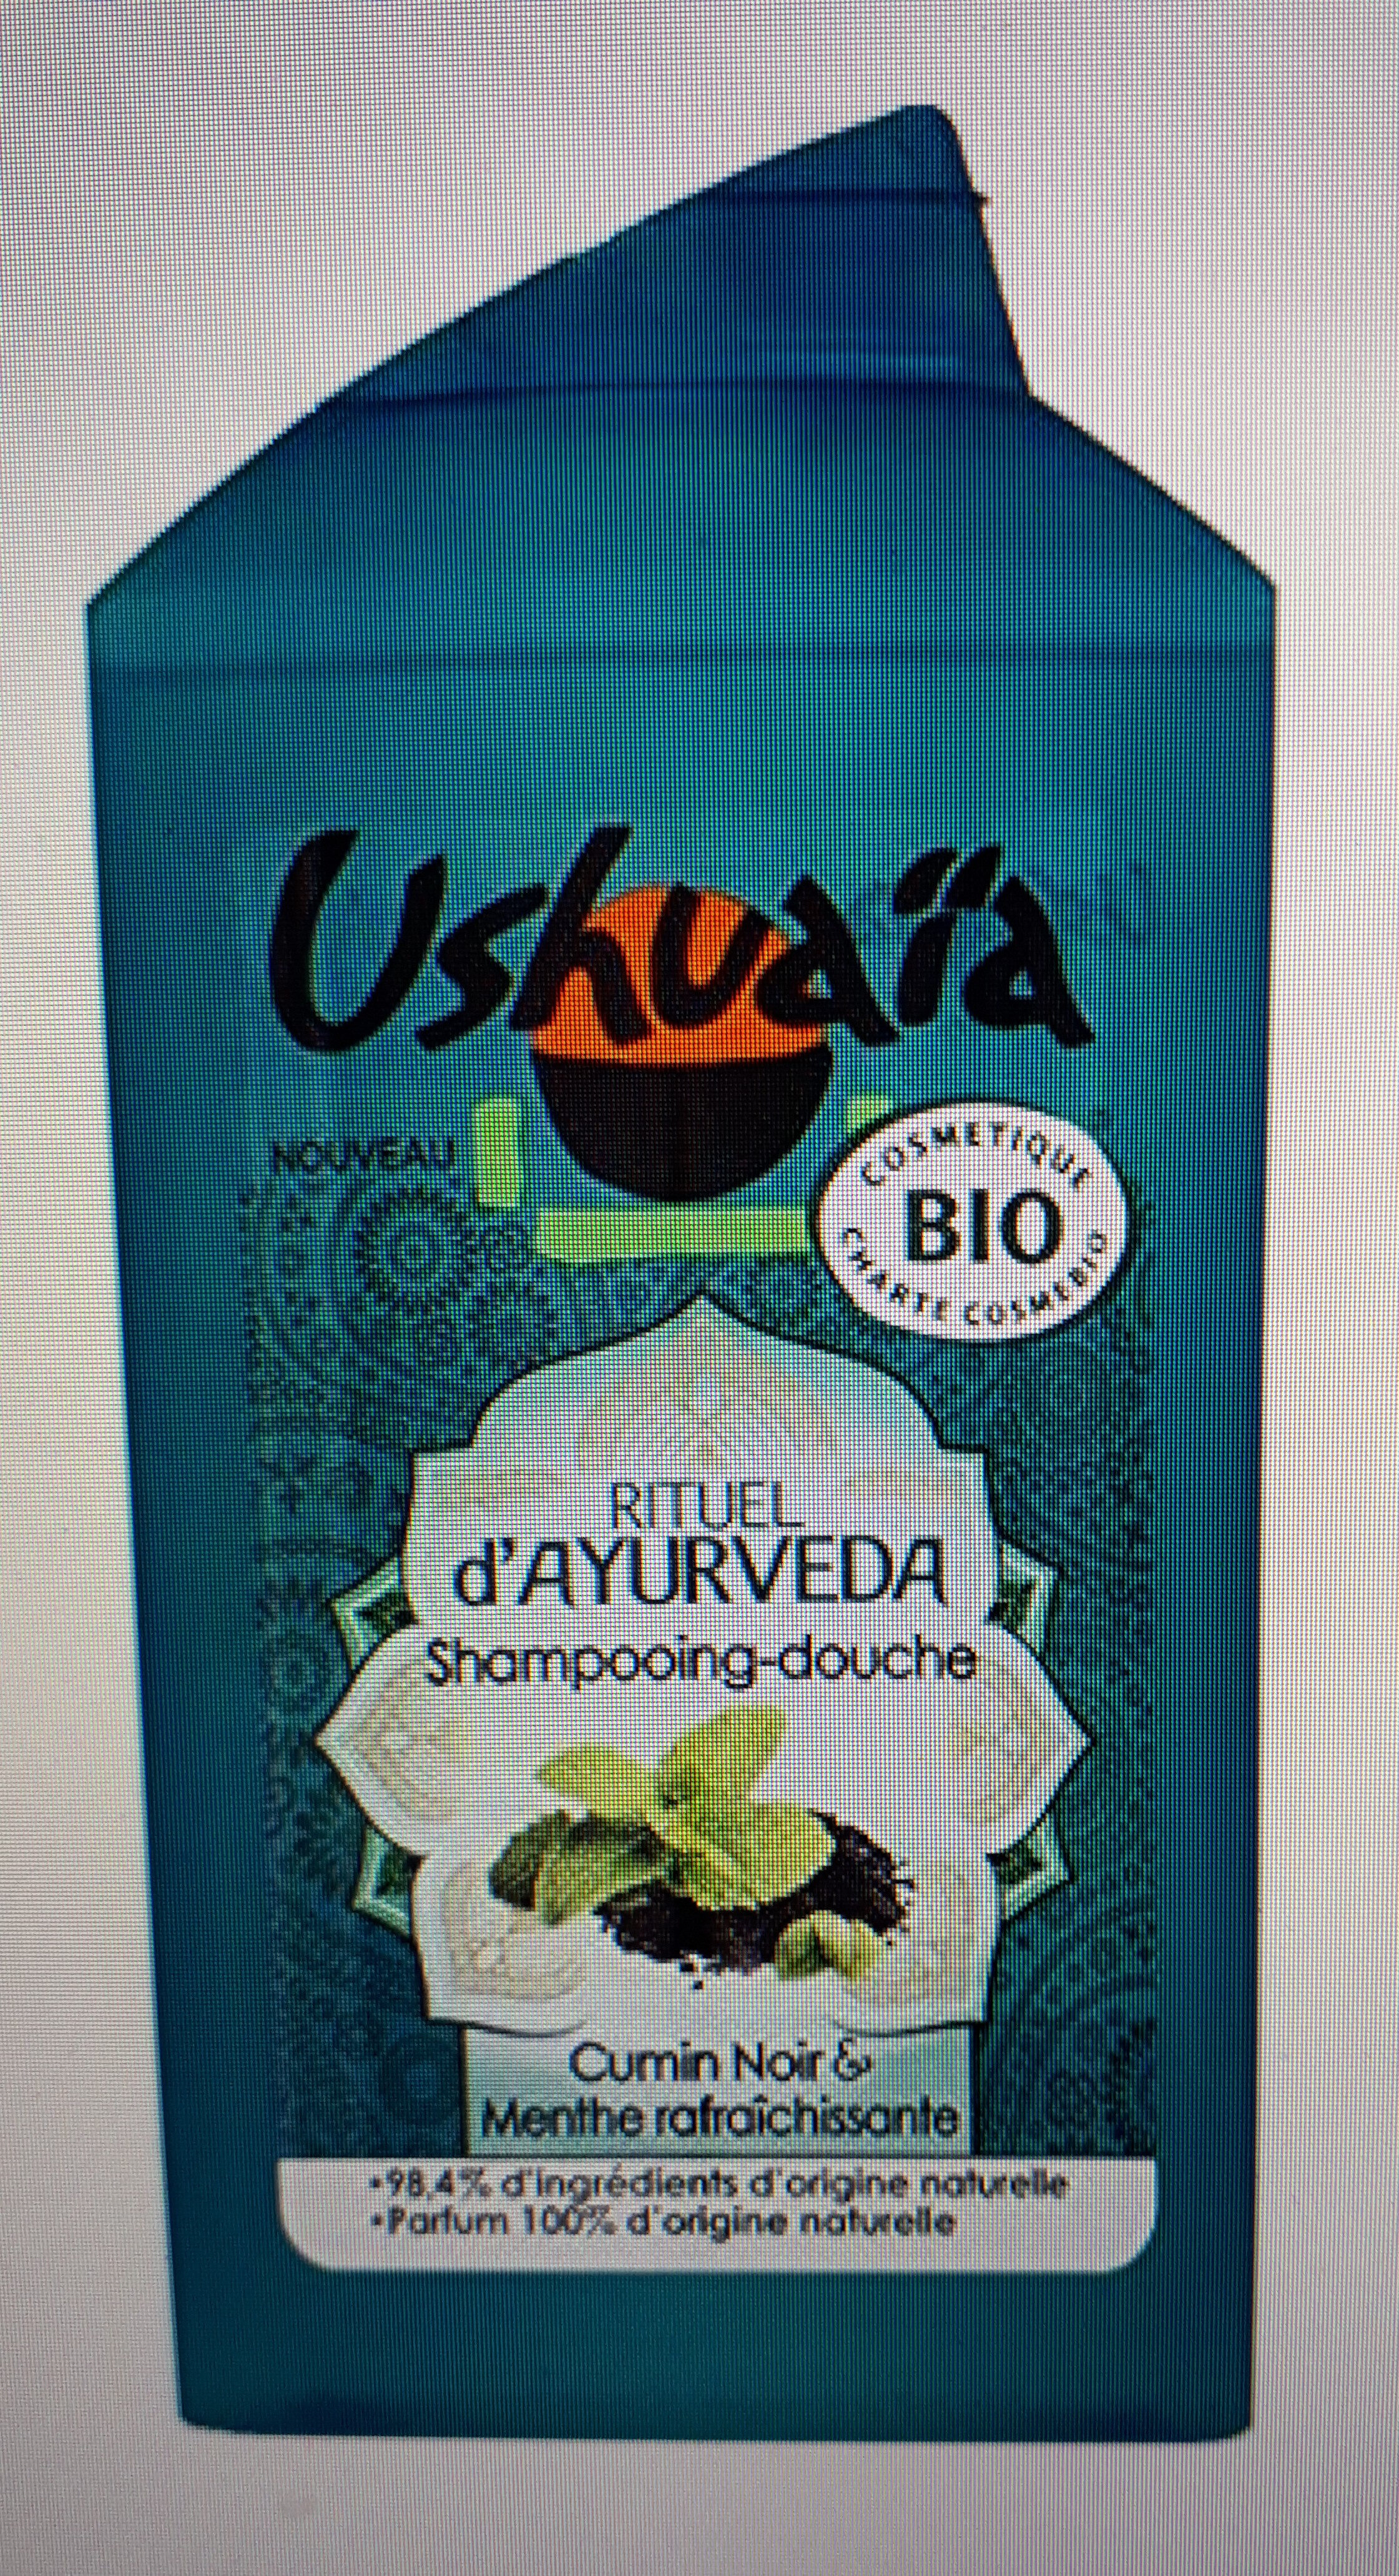 Rituel d'Ayurveda shampooing-douche - 製品 - fr